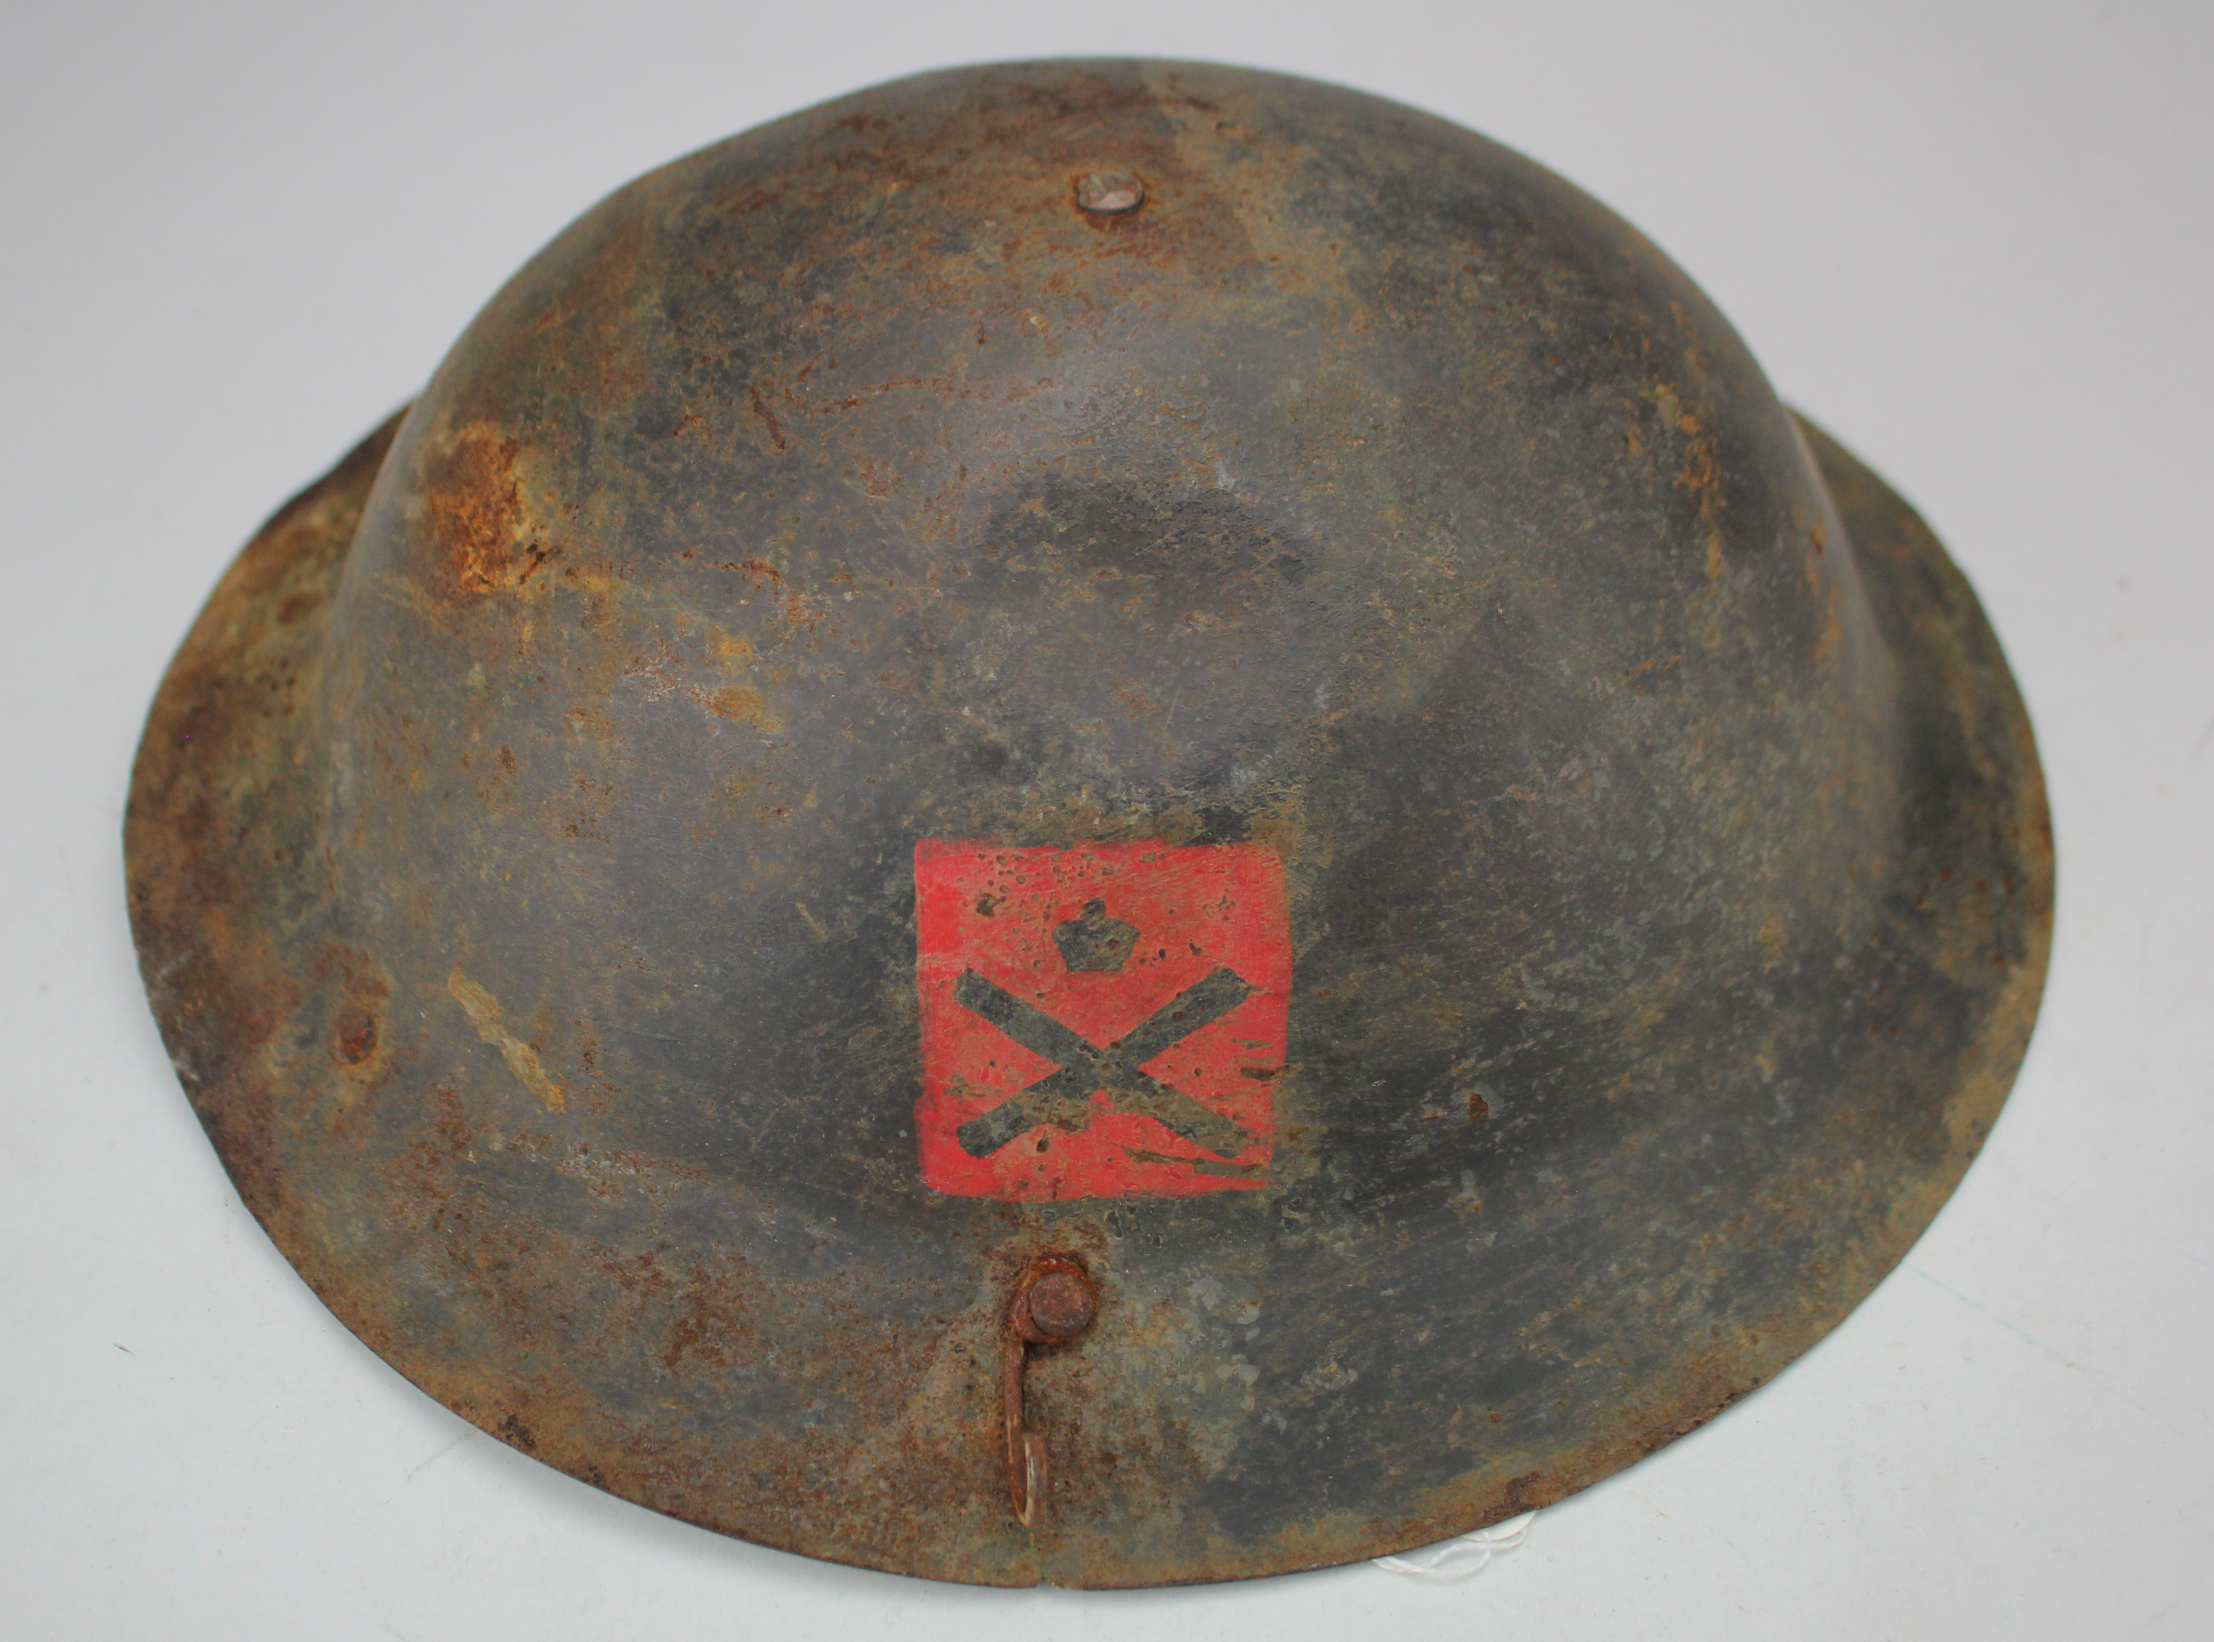 British WW1 Cruise helmet, worn by Tank and Machine gun crews mostly, offering eye protection,